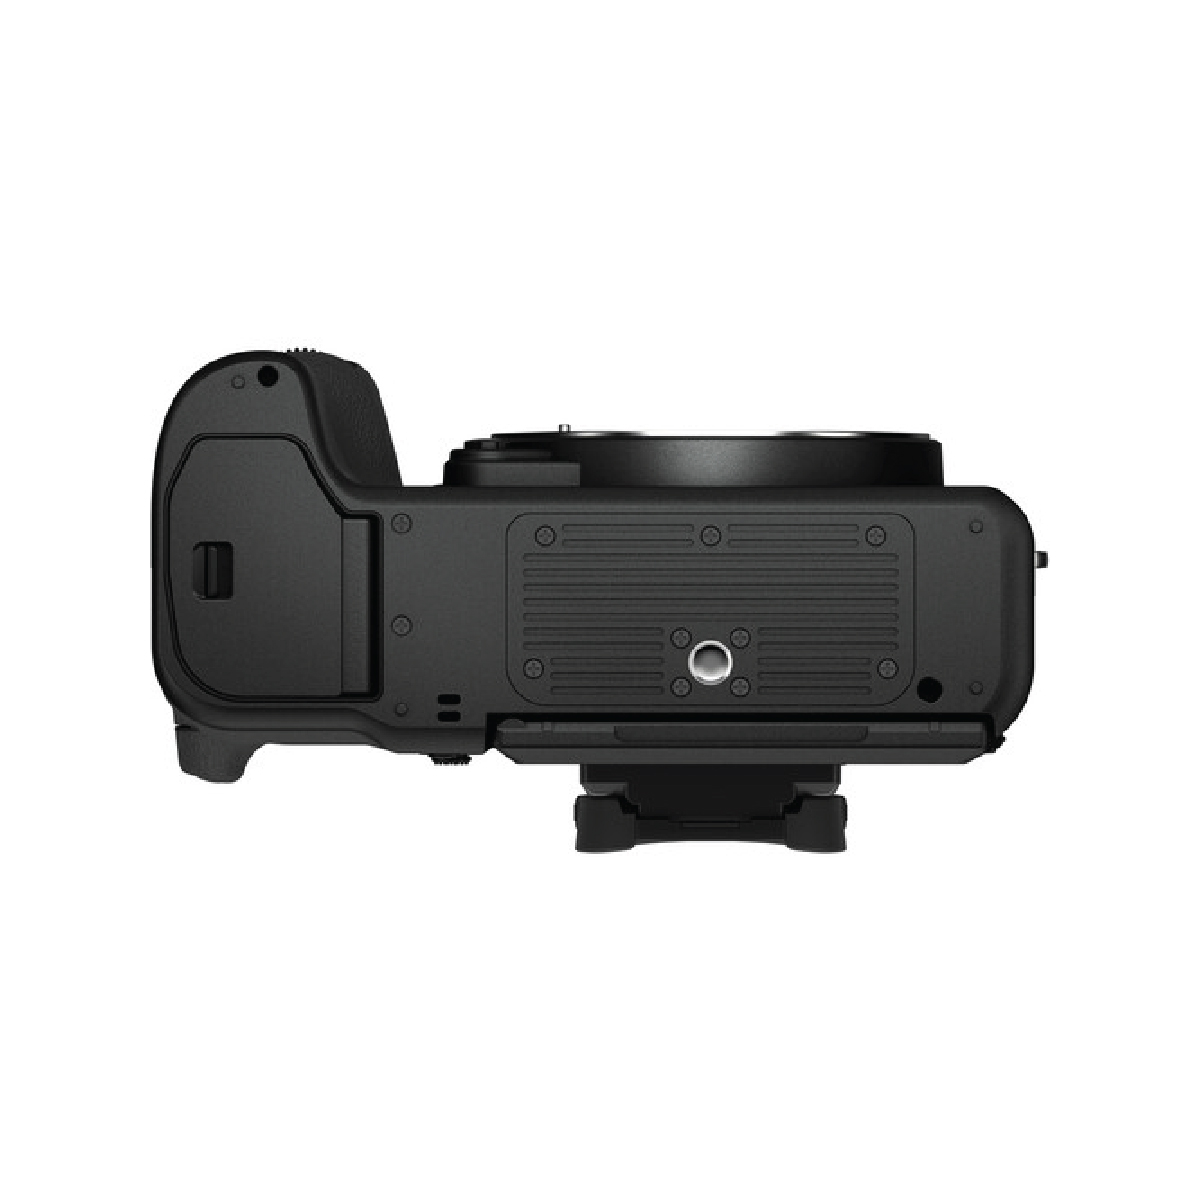 Fujifilm GFX 50S II Mirrorless Large Format Camera Body – Black (5)